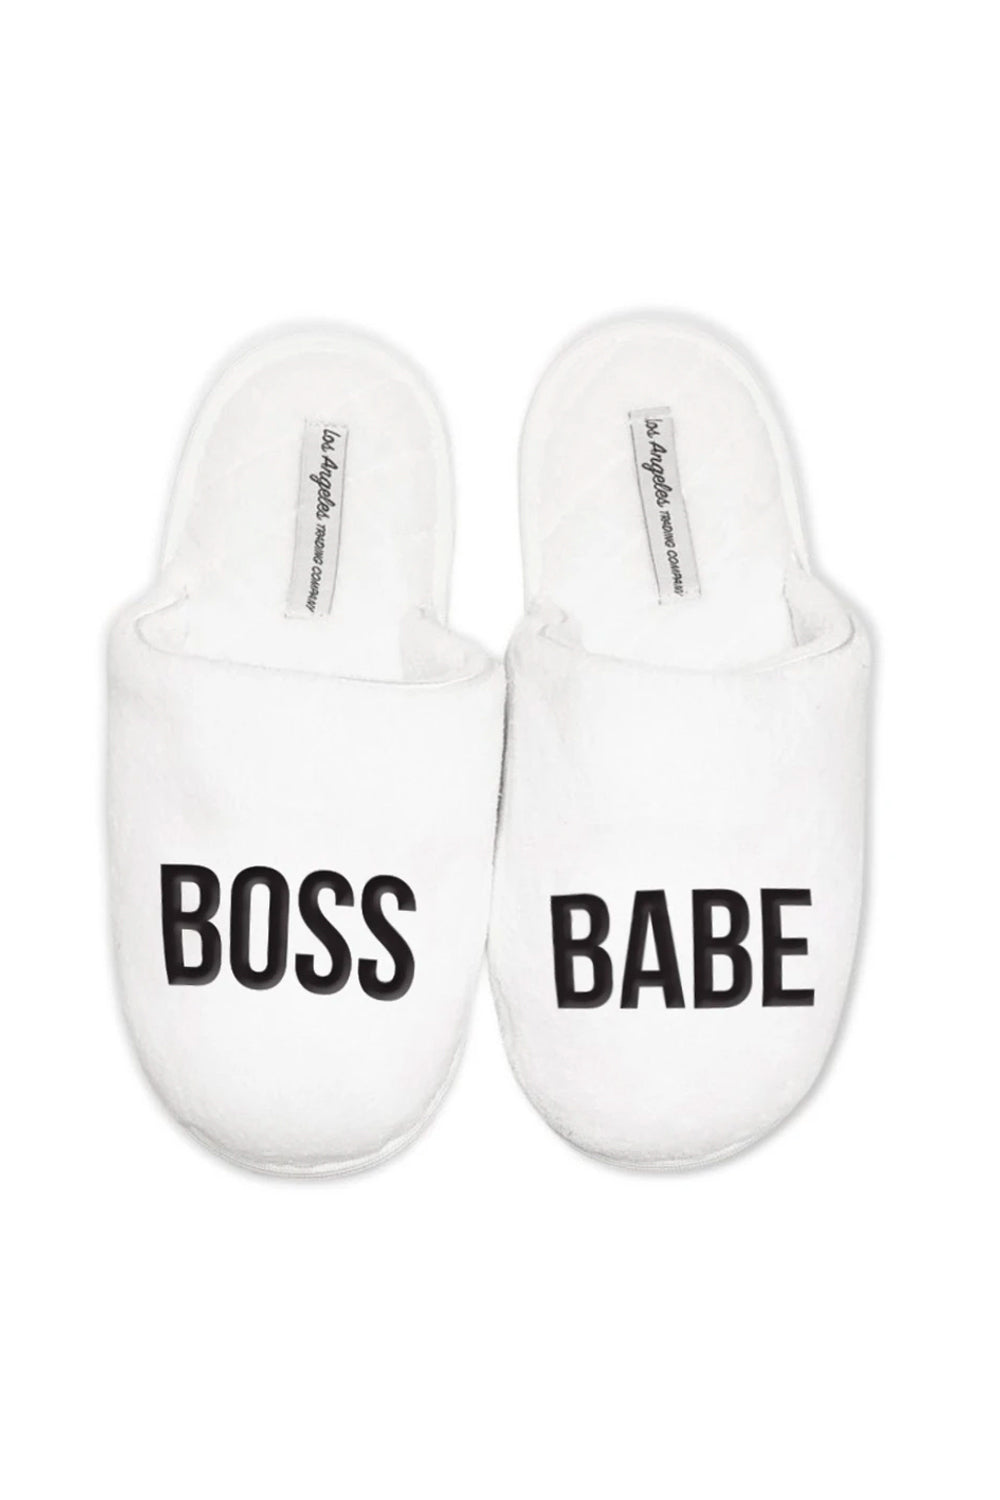 boss slippers womens